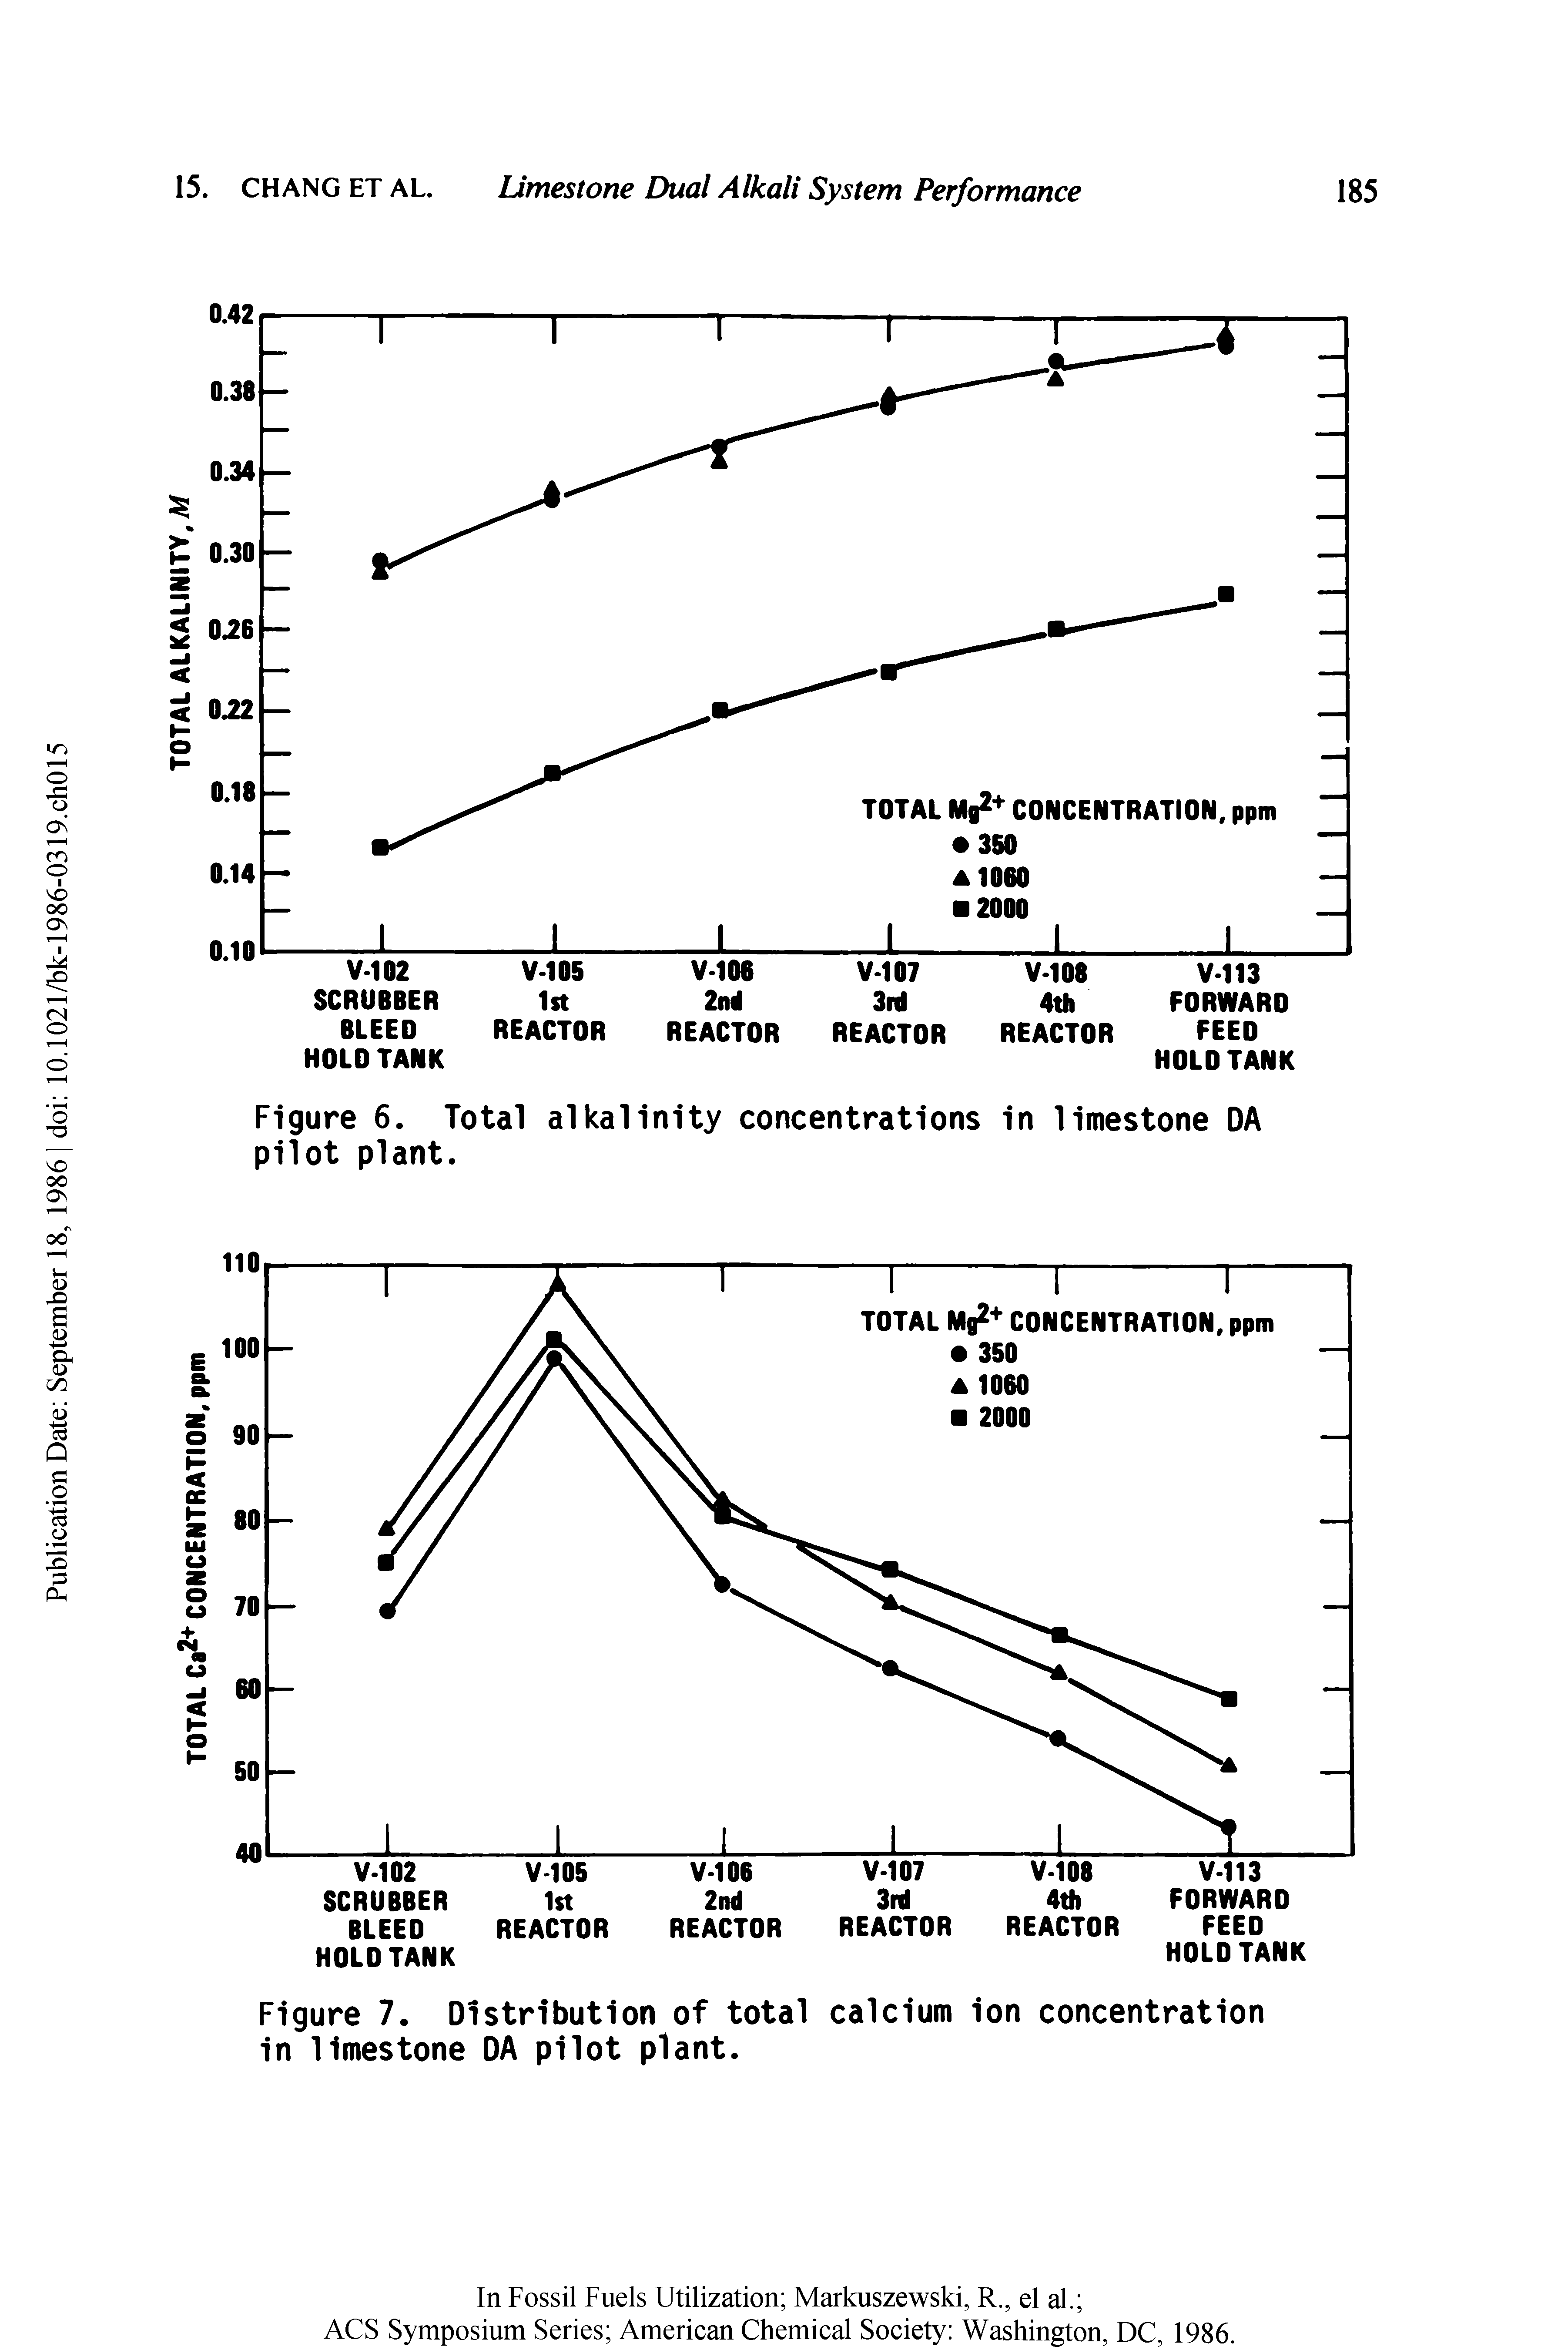 Figure 6. Total alkalinity concentrations in limestone DA pilot plant.